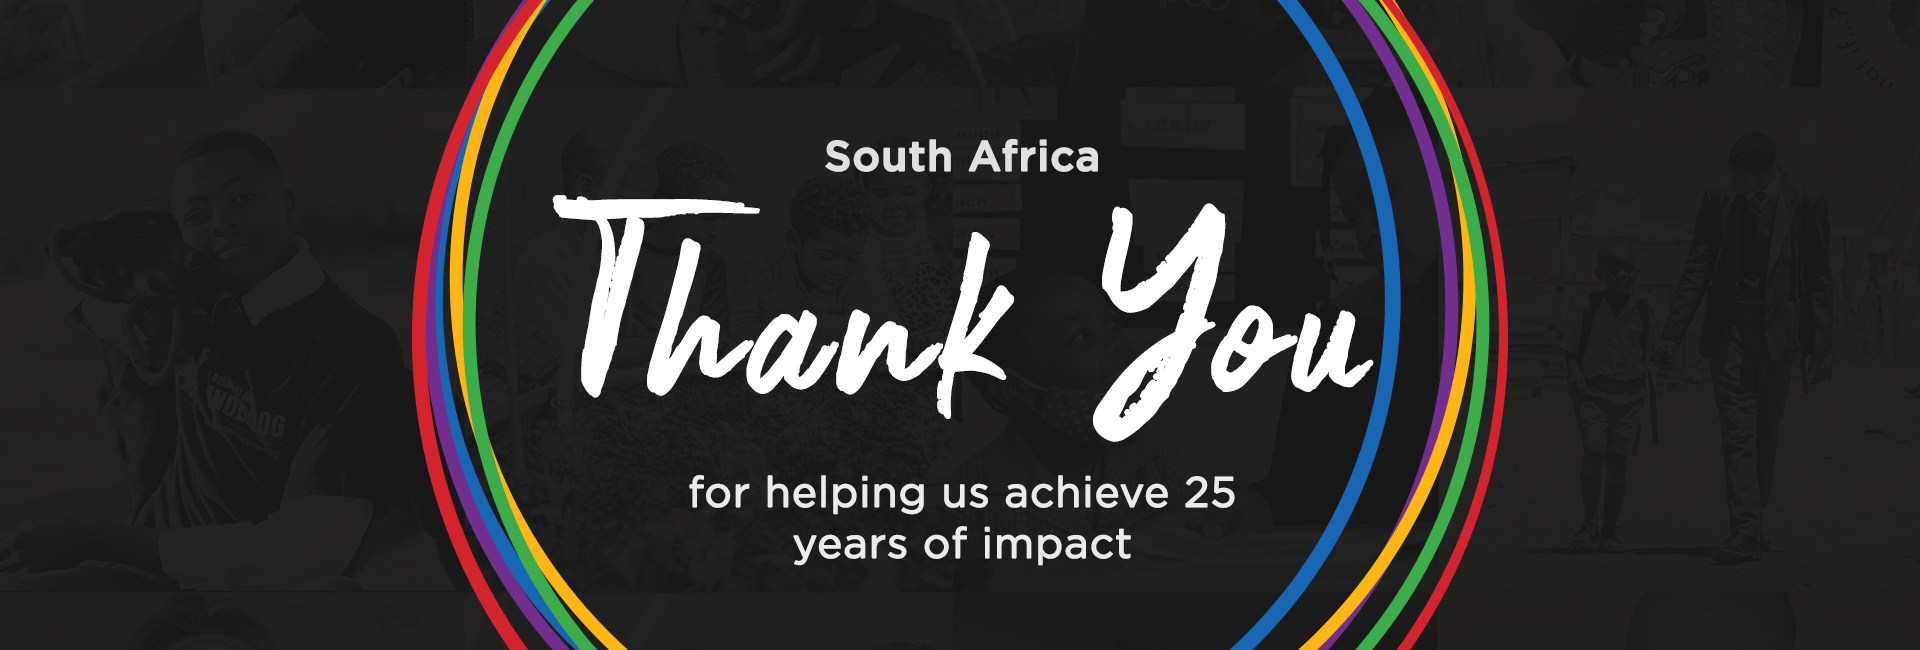 25 Years of impact banner